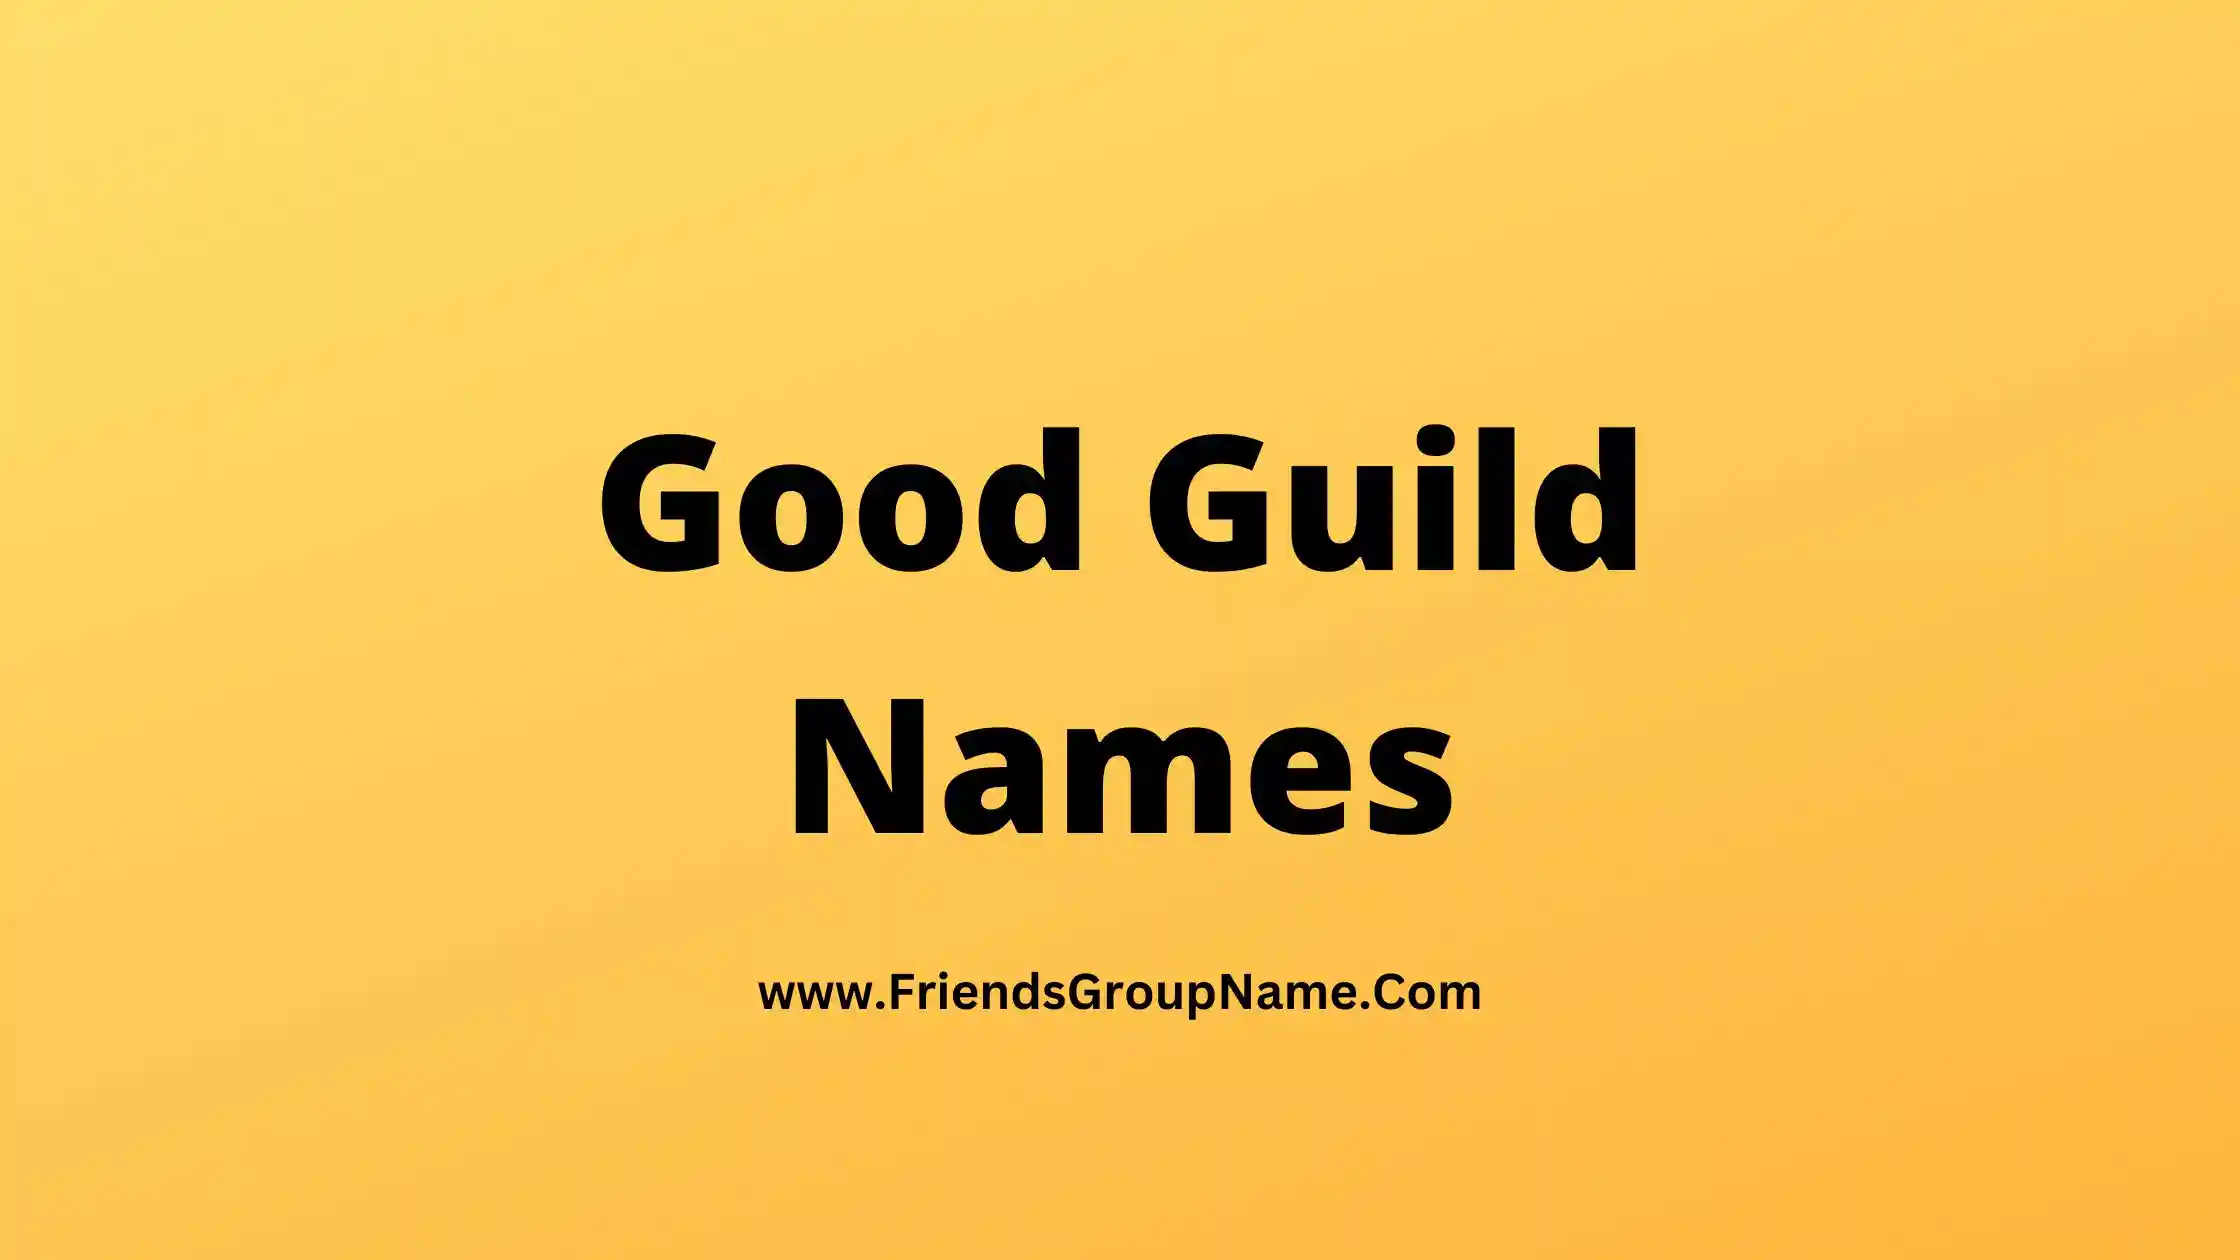 Good Guild Names